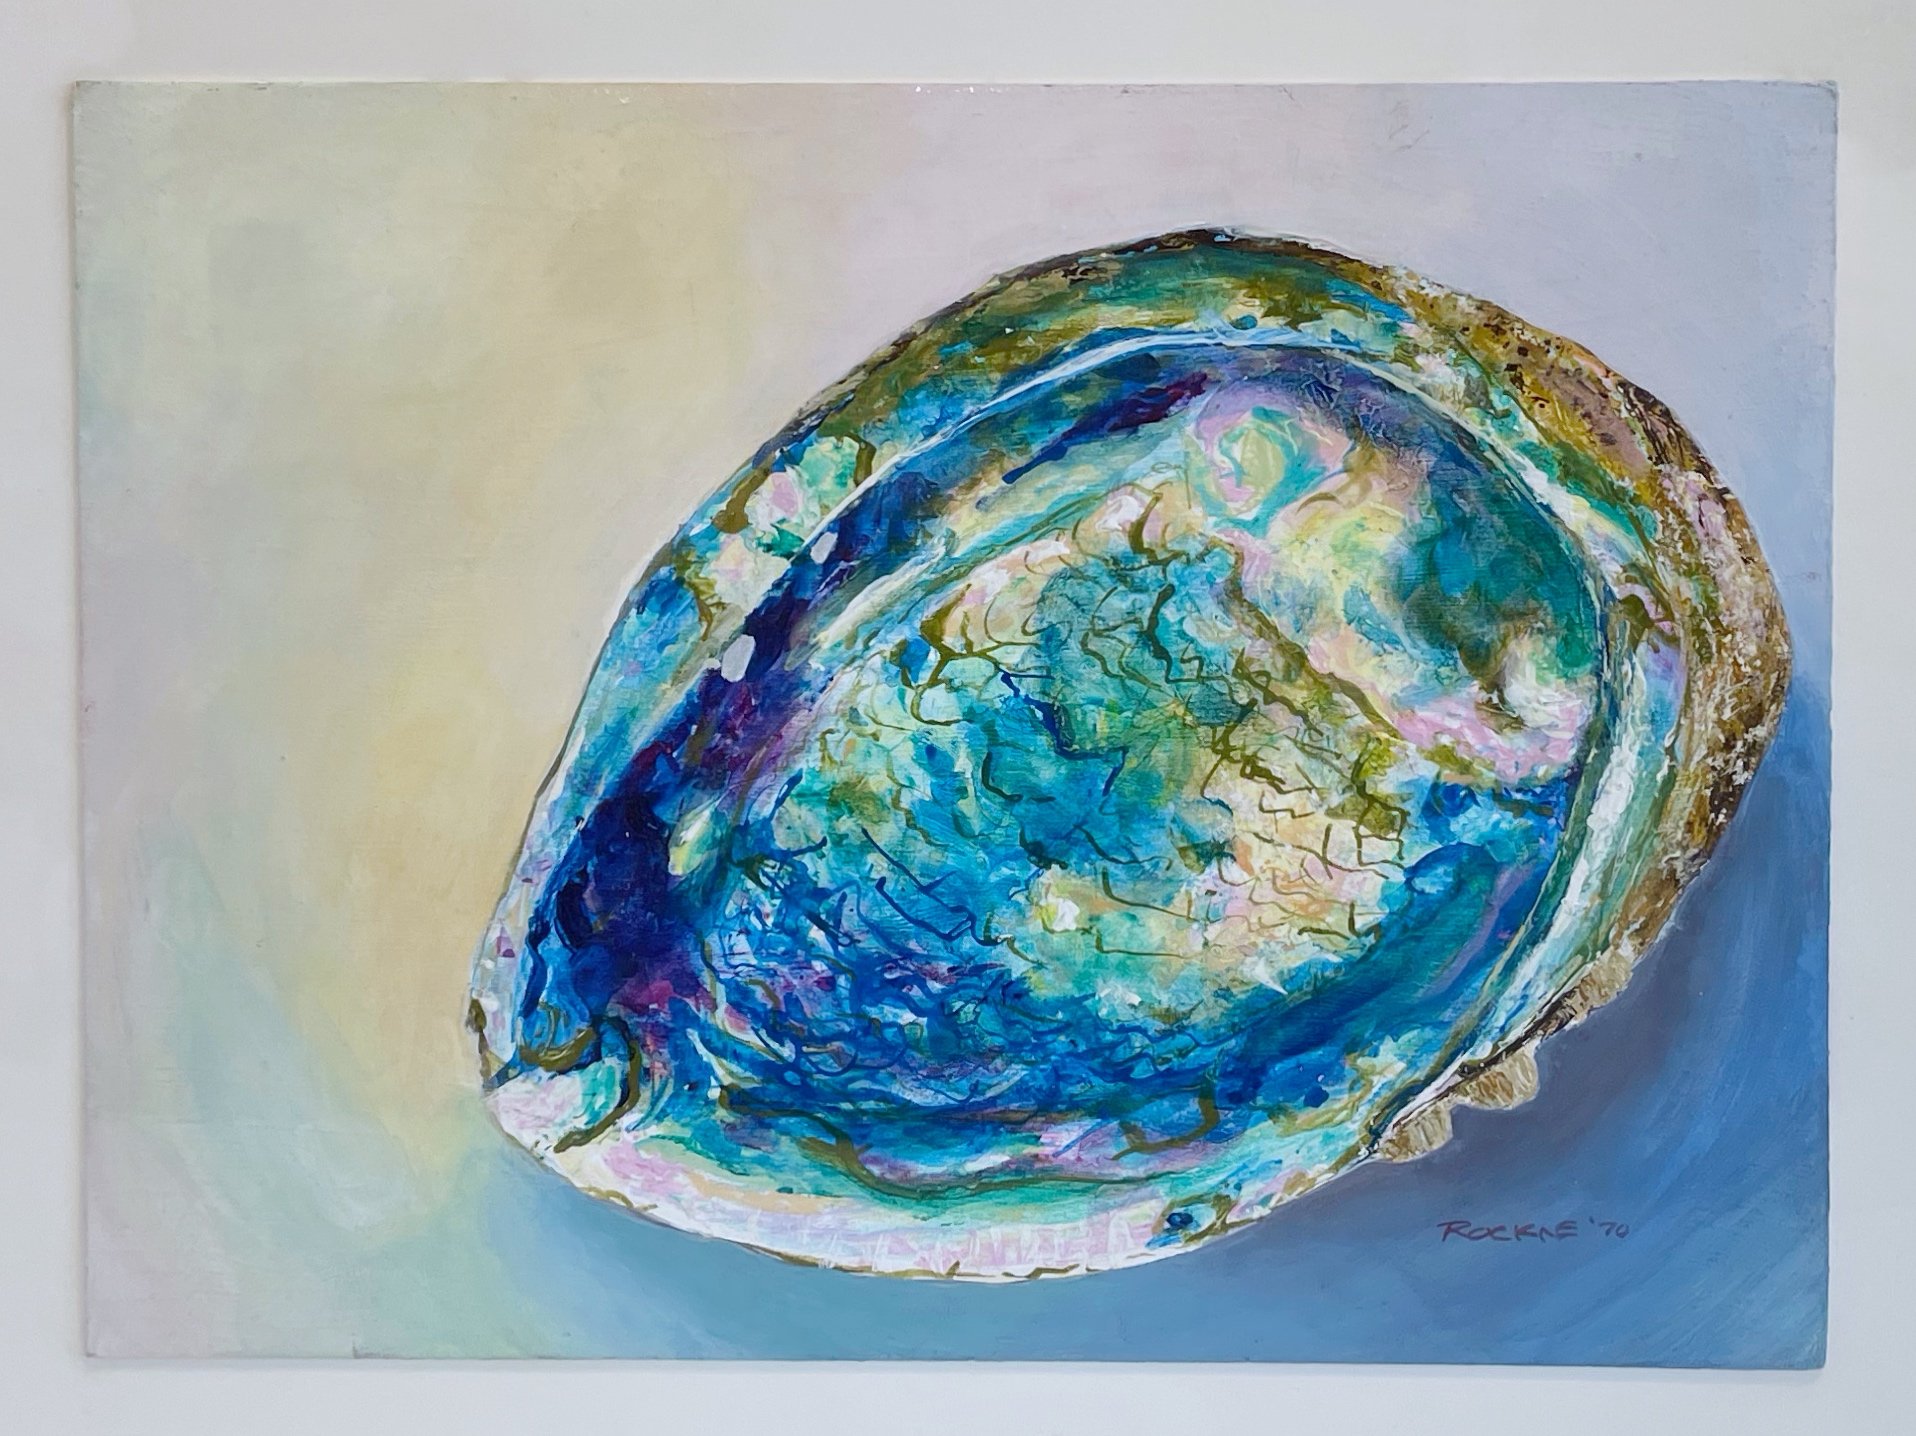 Blue Abalone by Phyllis Rockne